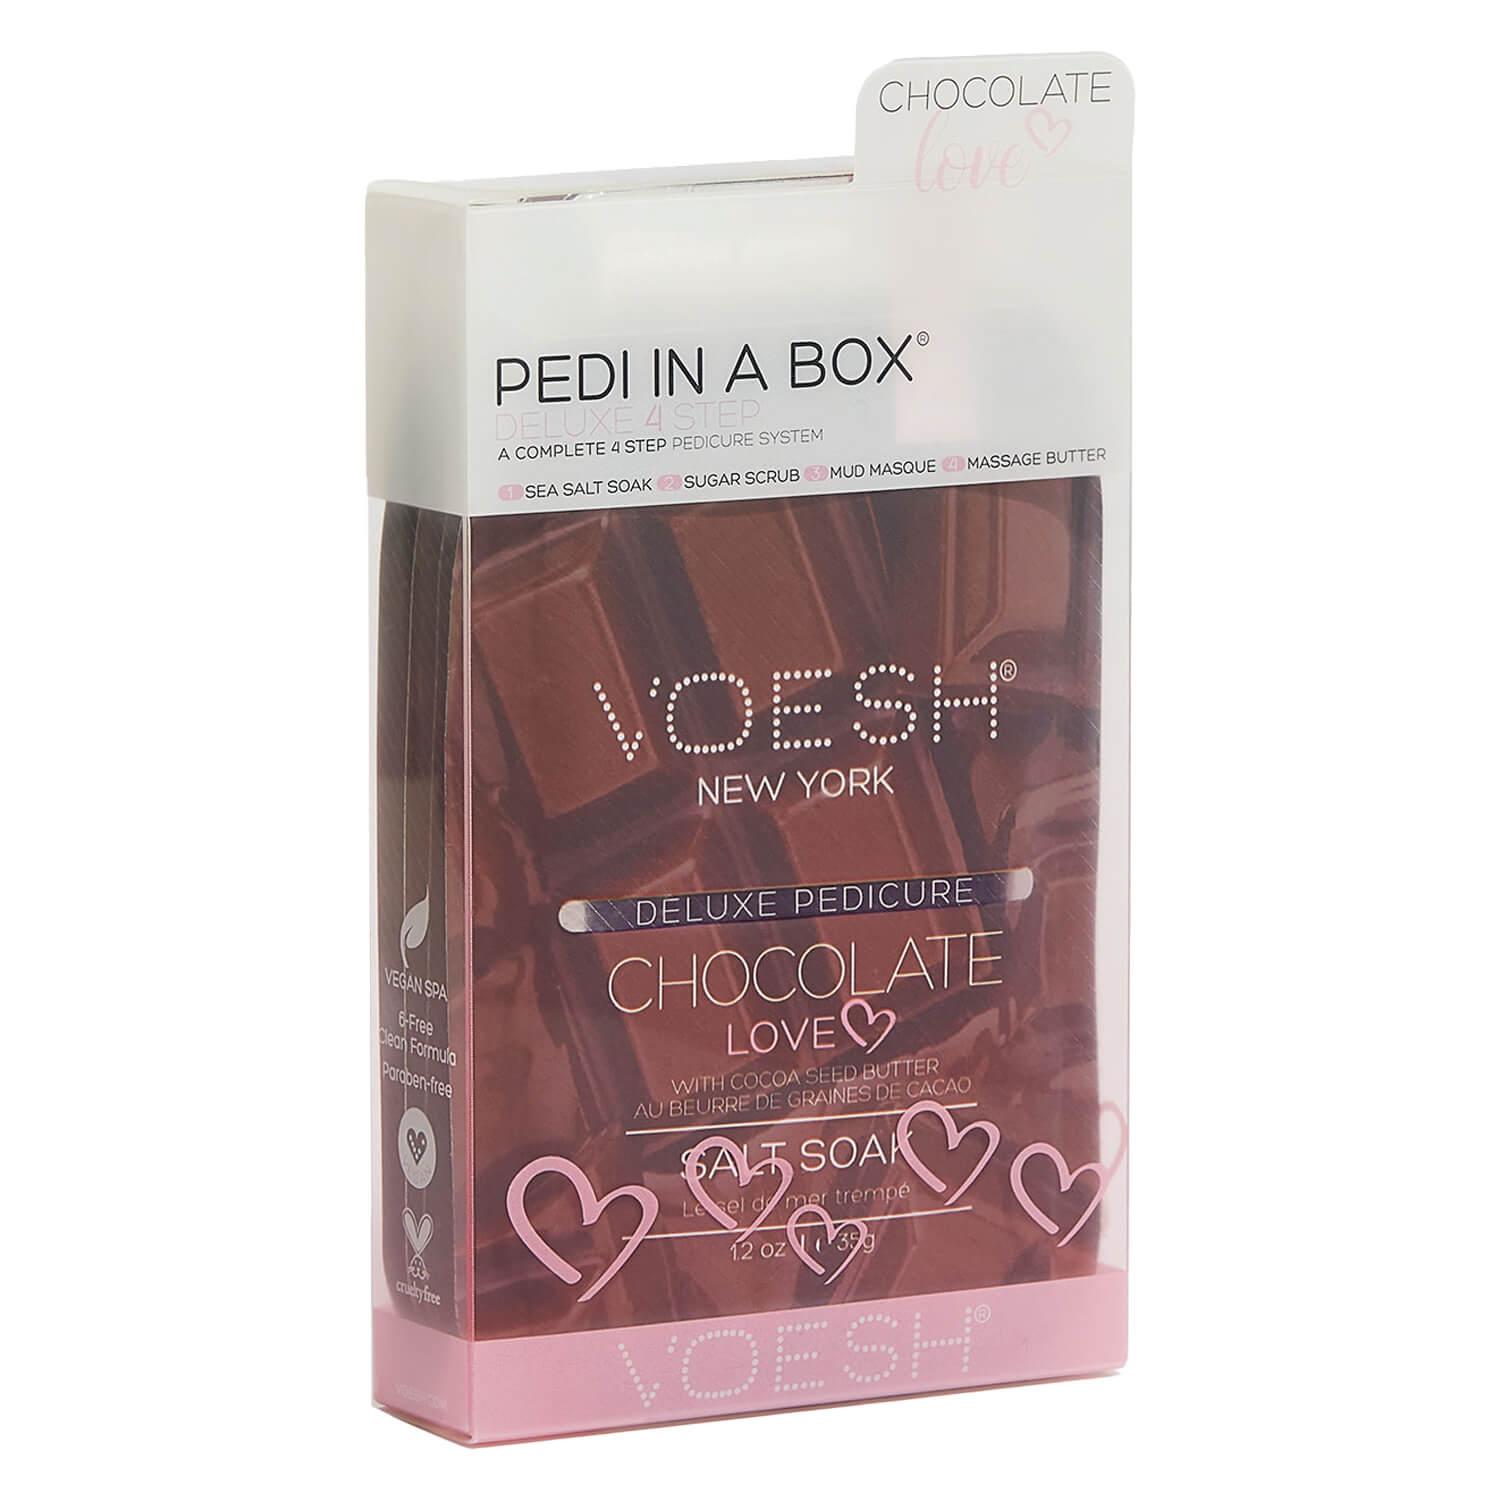 VOESH New York - Pedi In A Box 4 Step Chocolate Love